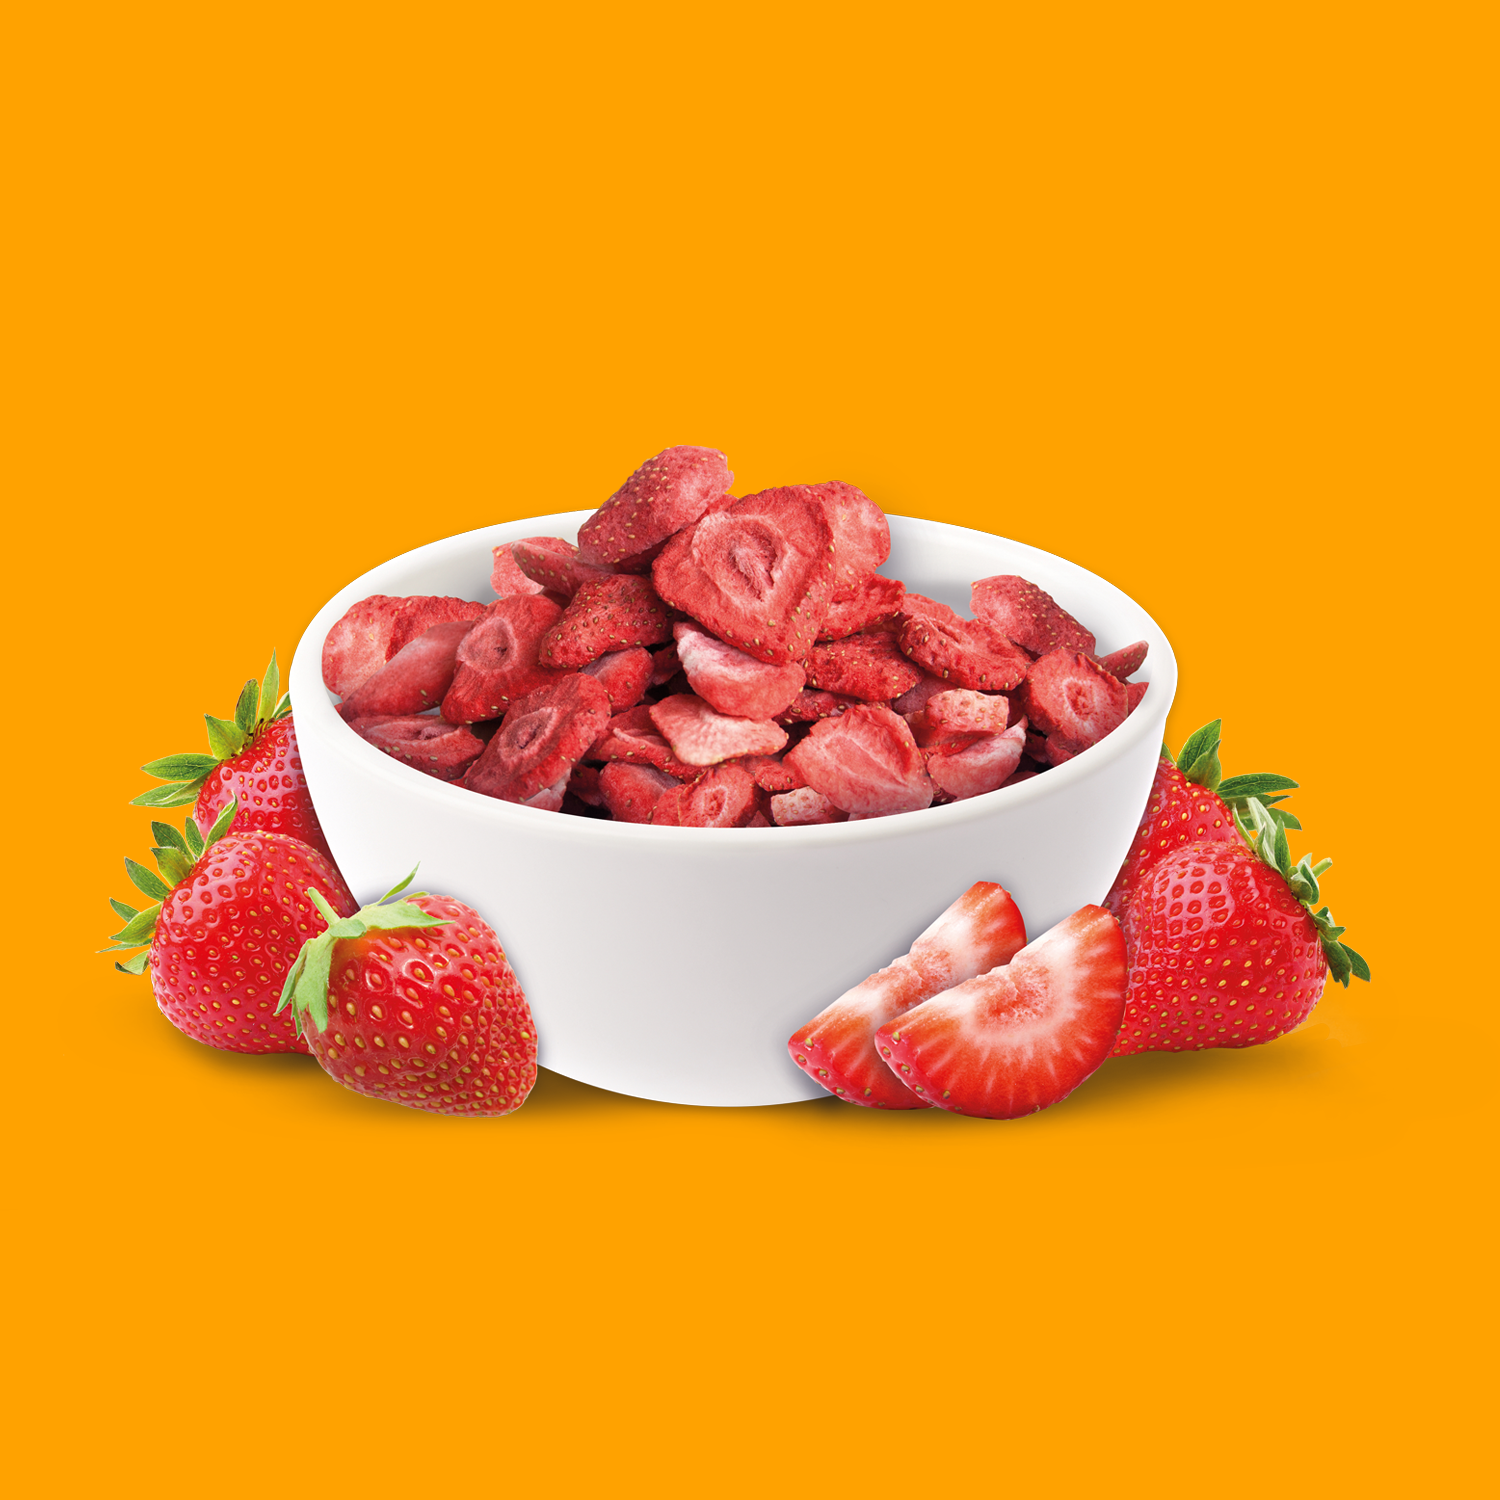 NutriPur gefriergetrocknet Erdbeeren natürlich